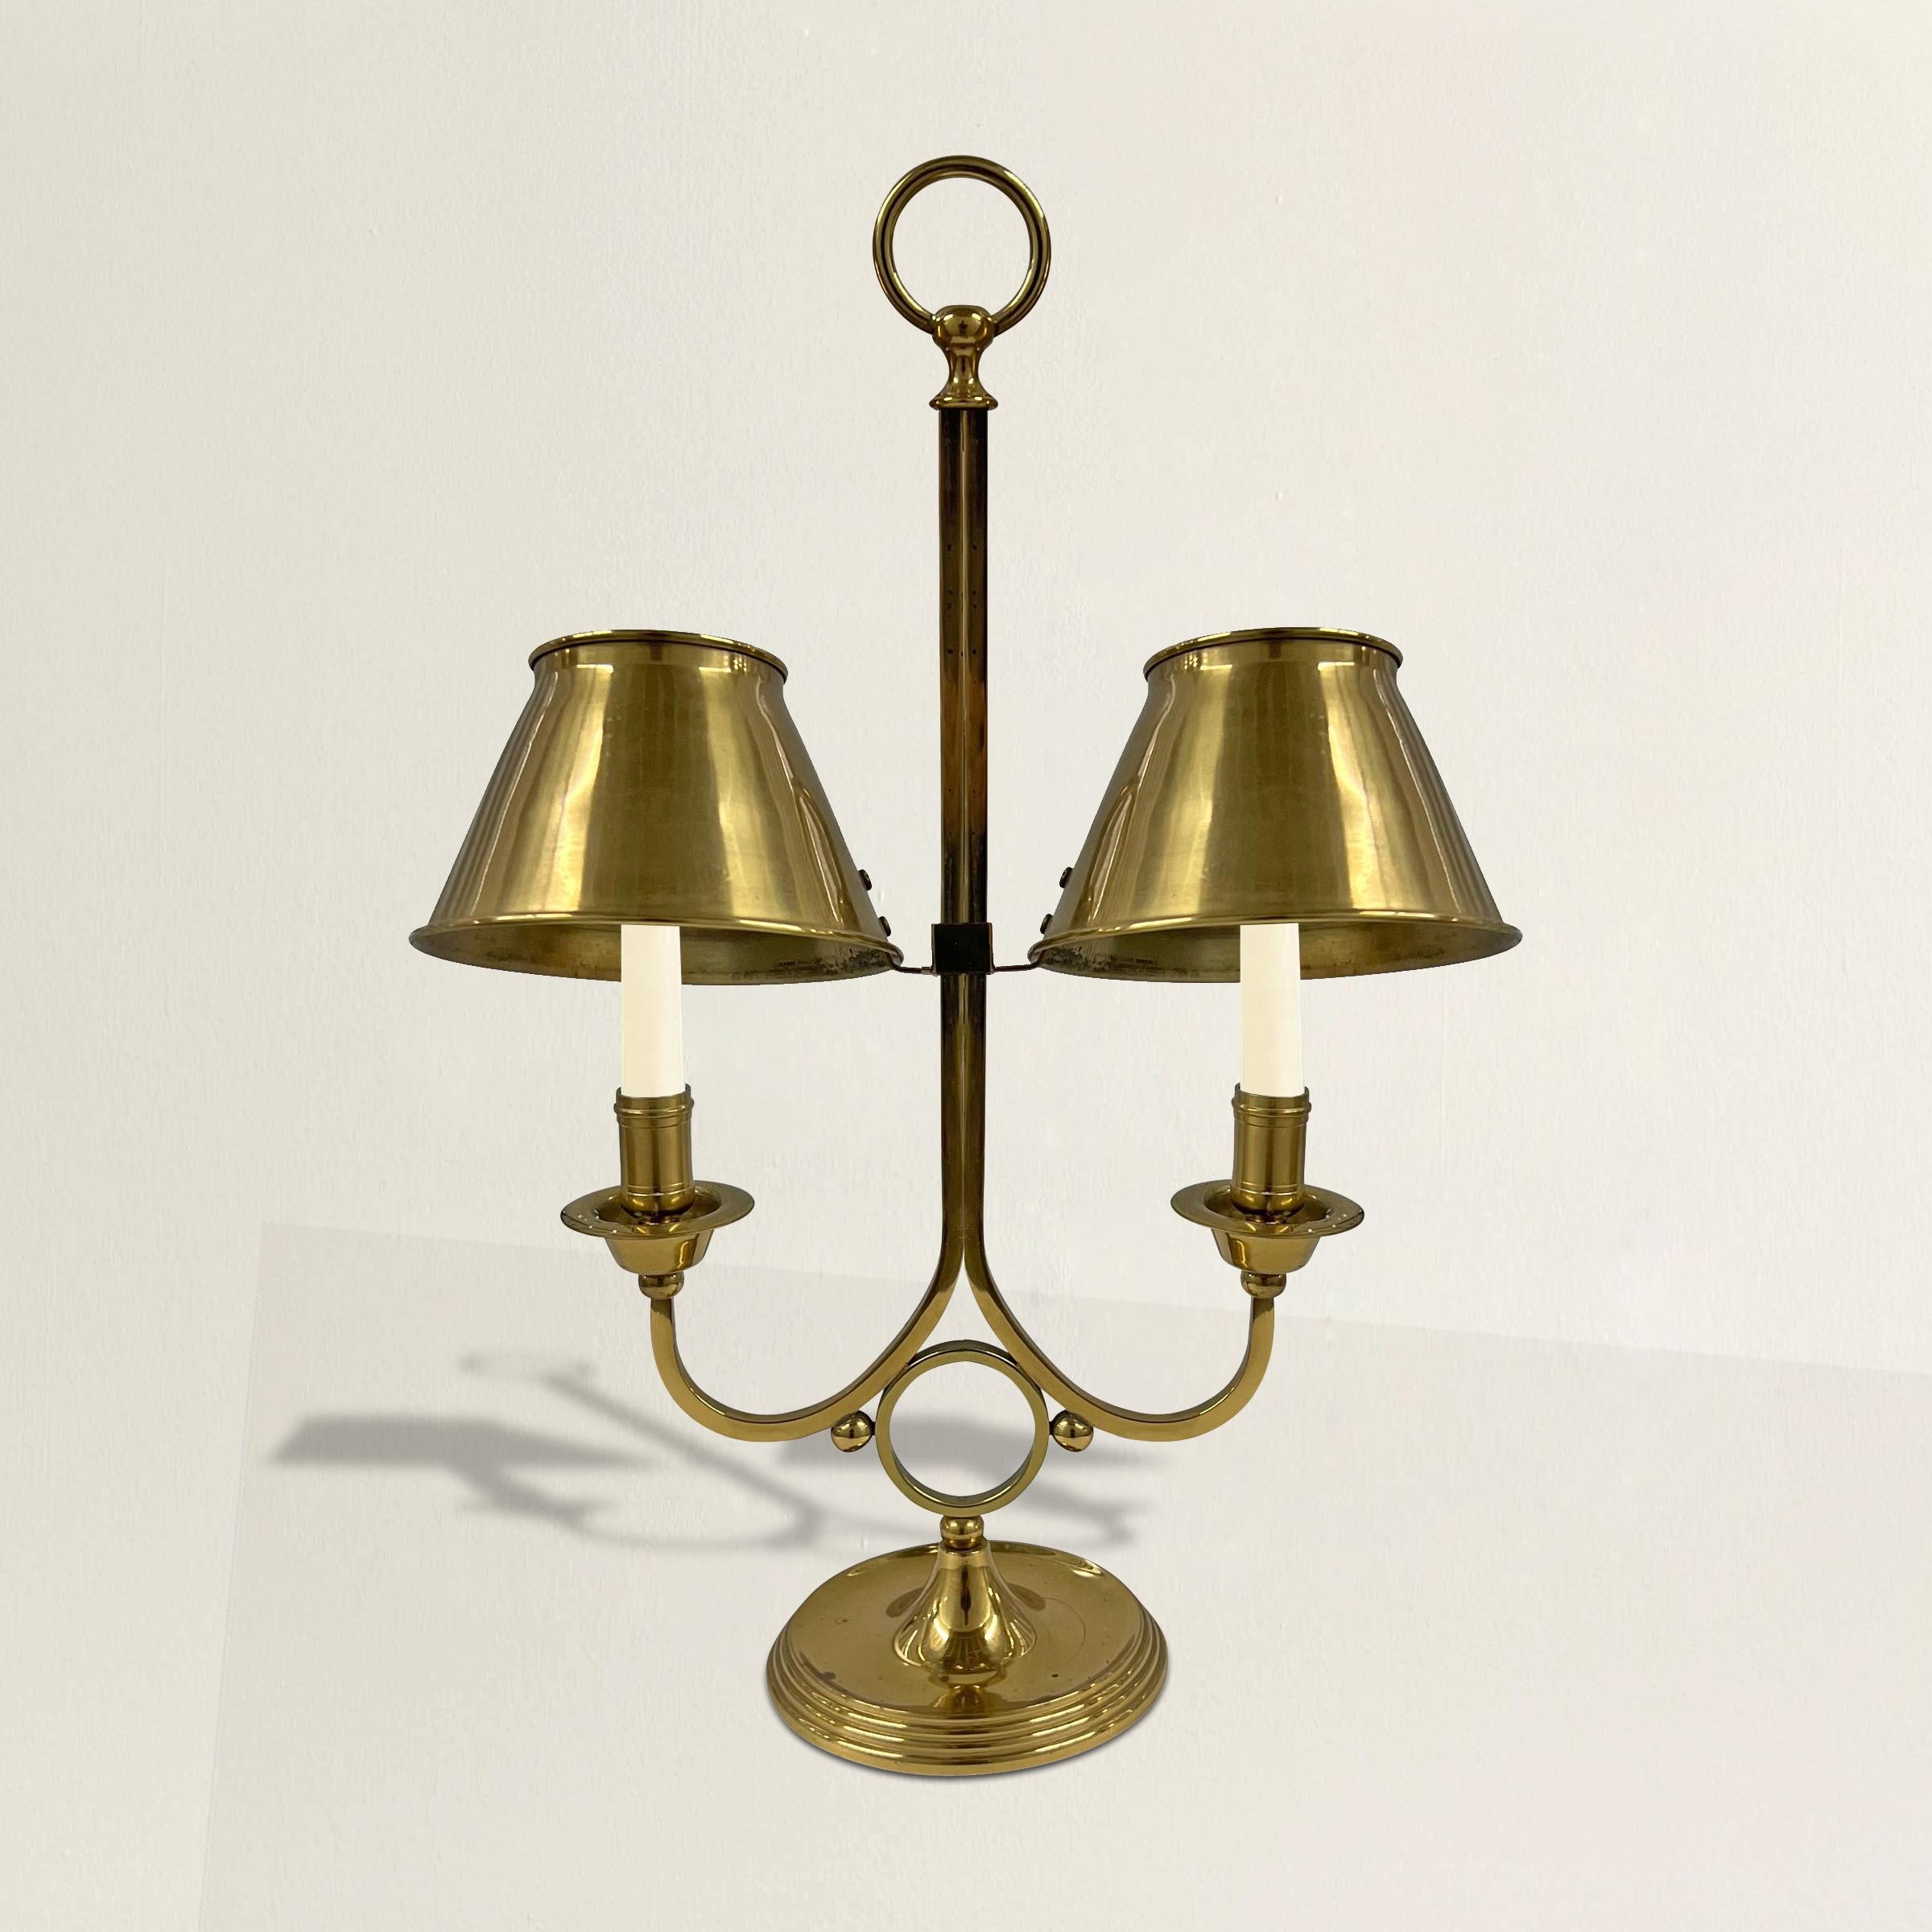 American Vintage Adjustable Brass Candle Lamp For Sale